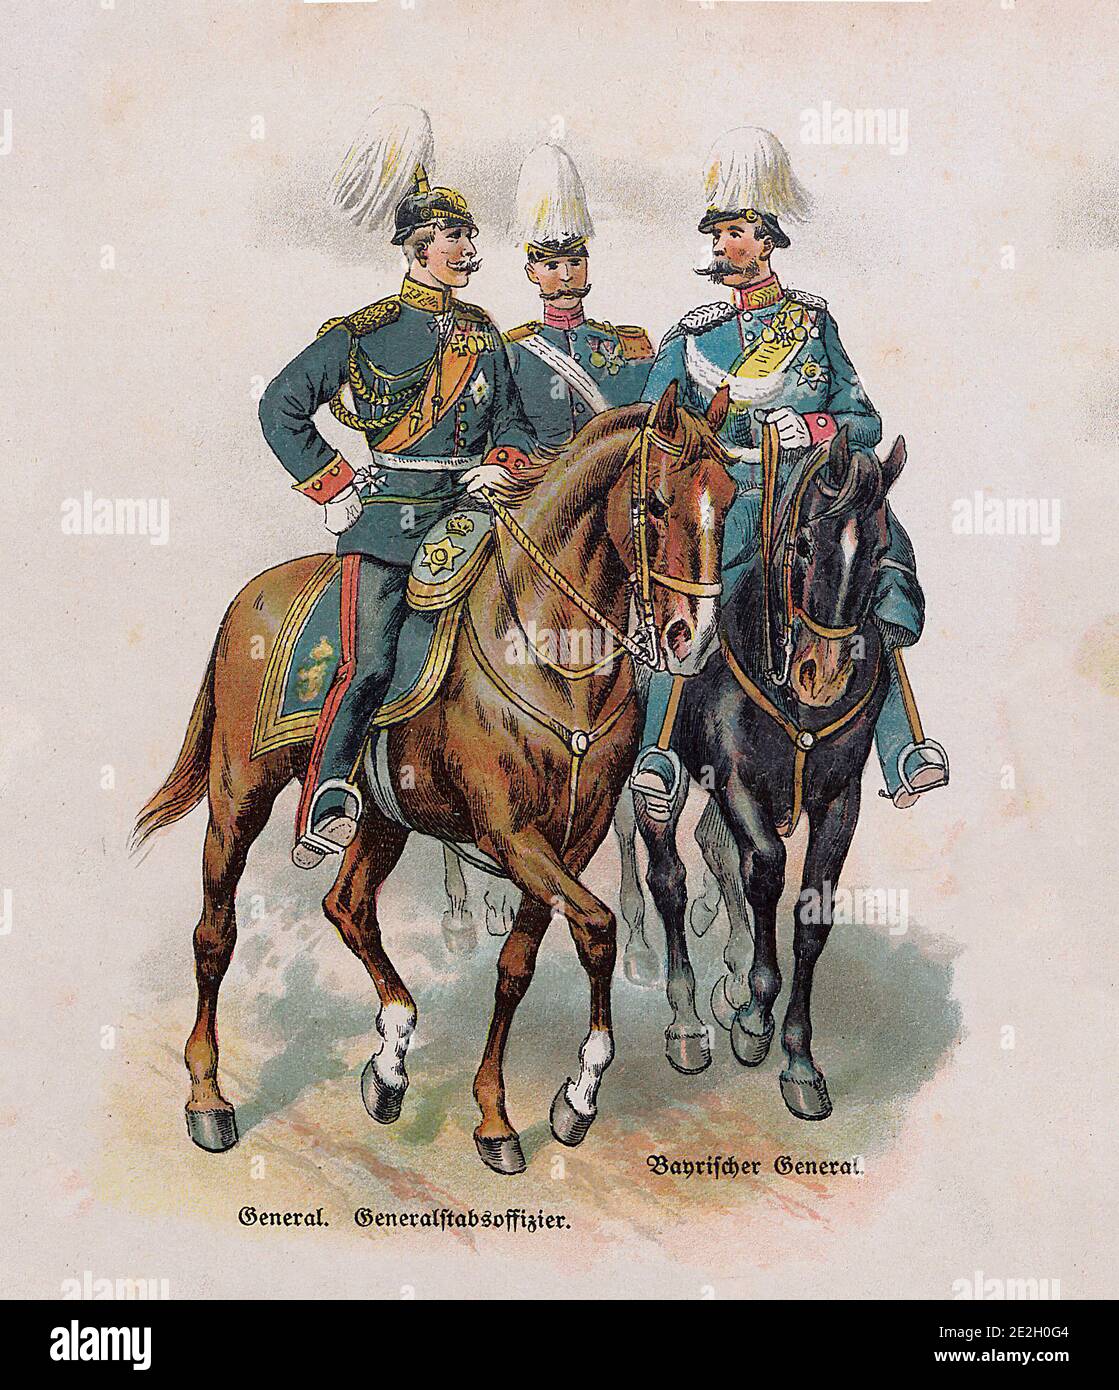 Imperial German Army (Deutsches Heer). General, general staff officer, Bavarian general. German Empire. 1910s Stock Photo